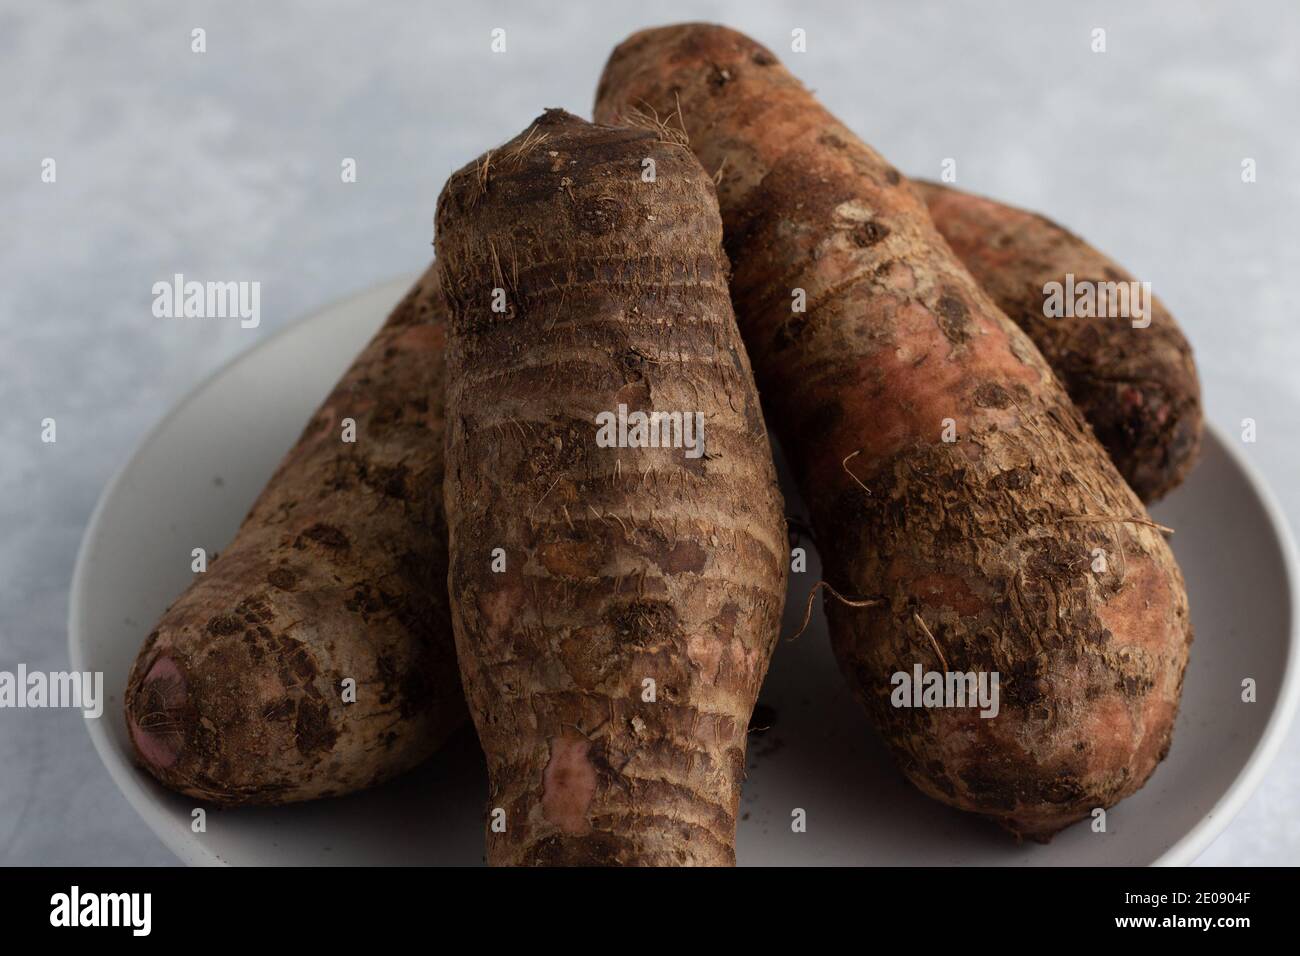 Cocoyam. Dasheen. Eddo. Taro. Tropical root crop Stock Photo